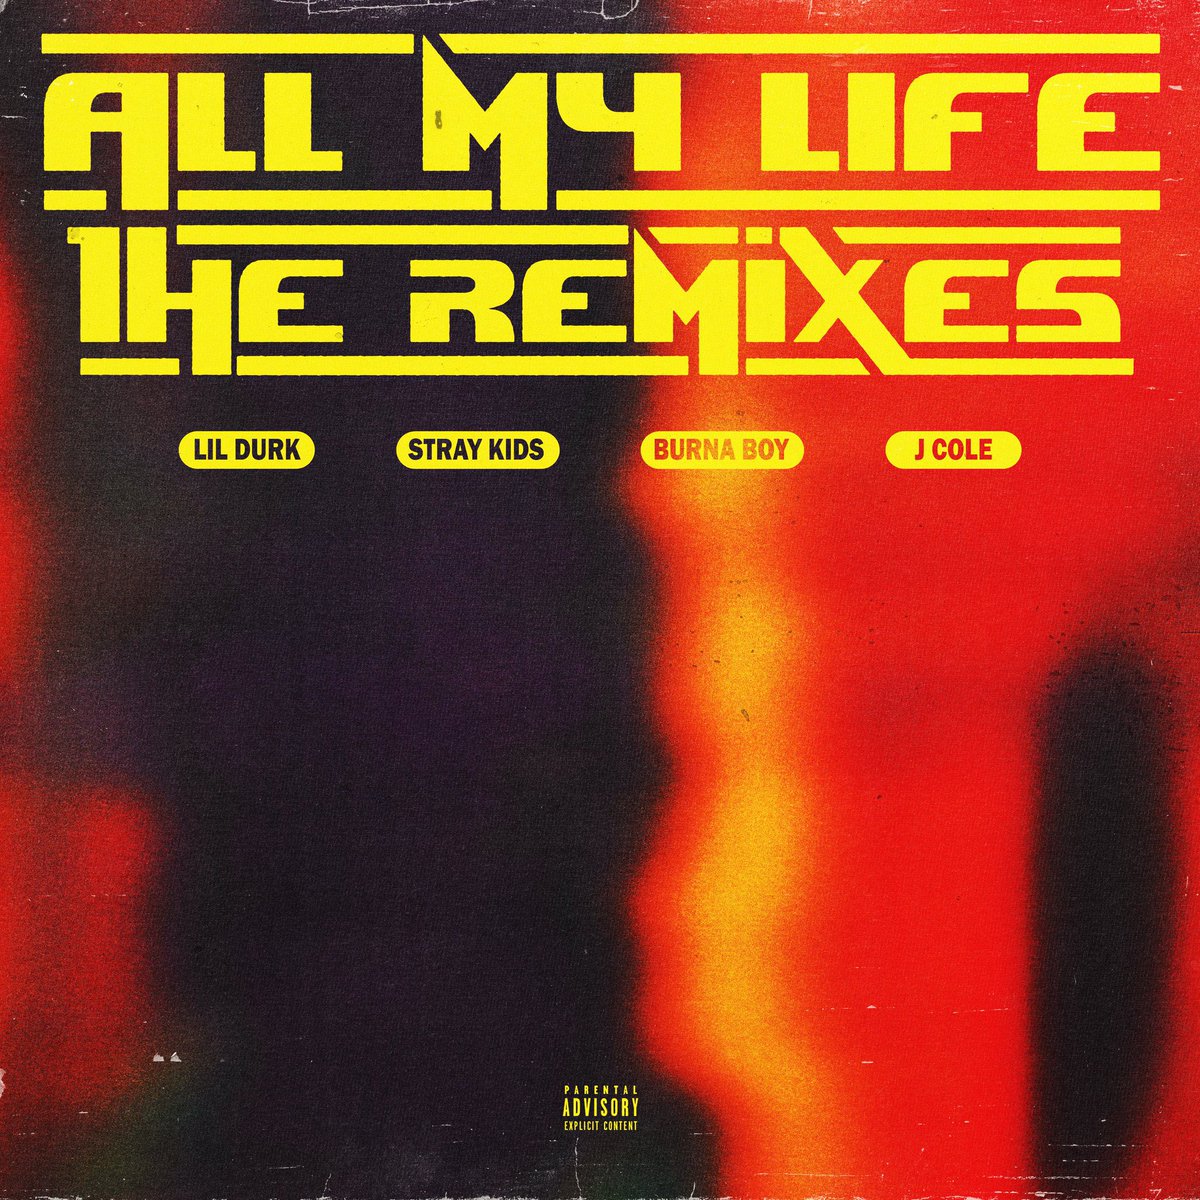 Lil Durk 'All My Life (Burnaboy Remix)'

Released Online
 
Spotify bit.ly/3tybYIH
Apple Music bit.ly/3twFlv7
YouTube Music bit.ly/46Nde93
 
#Burnaboy #ITOLDTHEM #AllMyLife #AllMyLifeRemix 

@lildurk